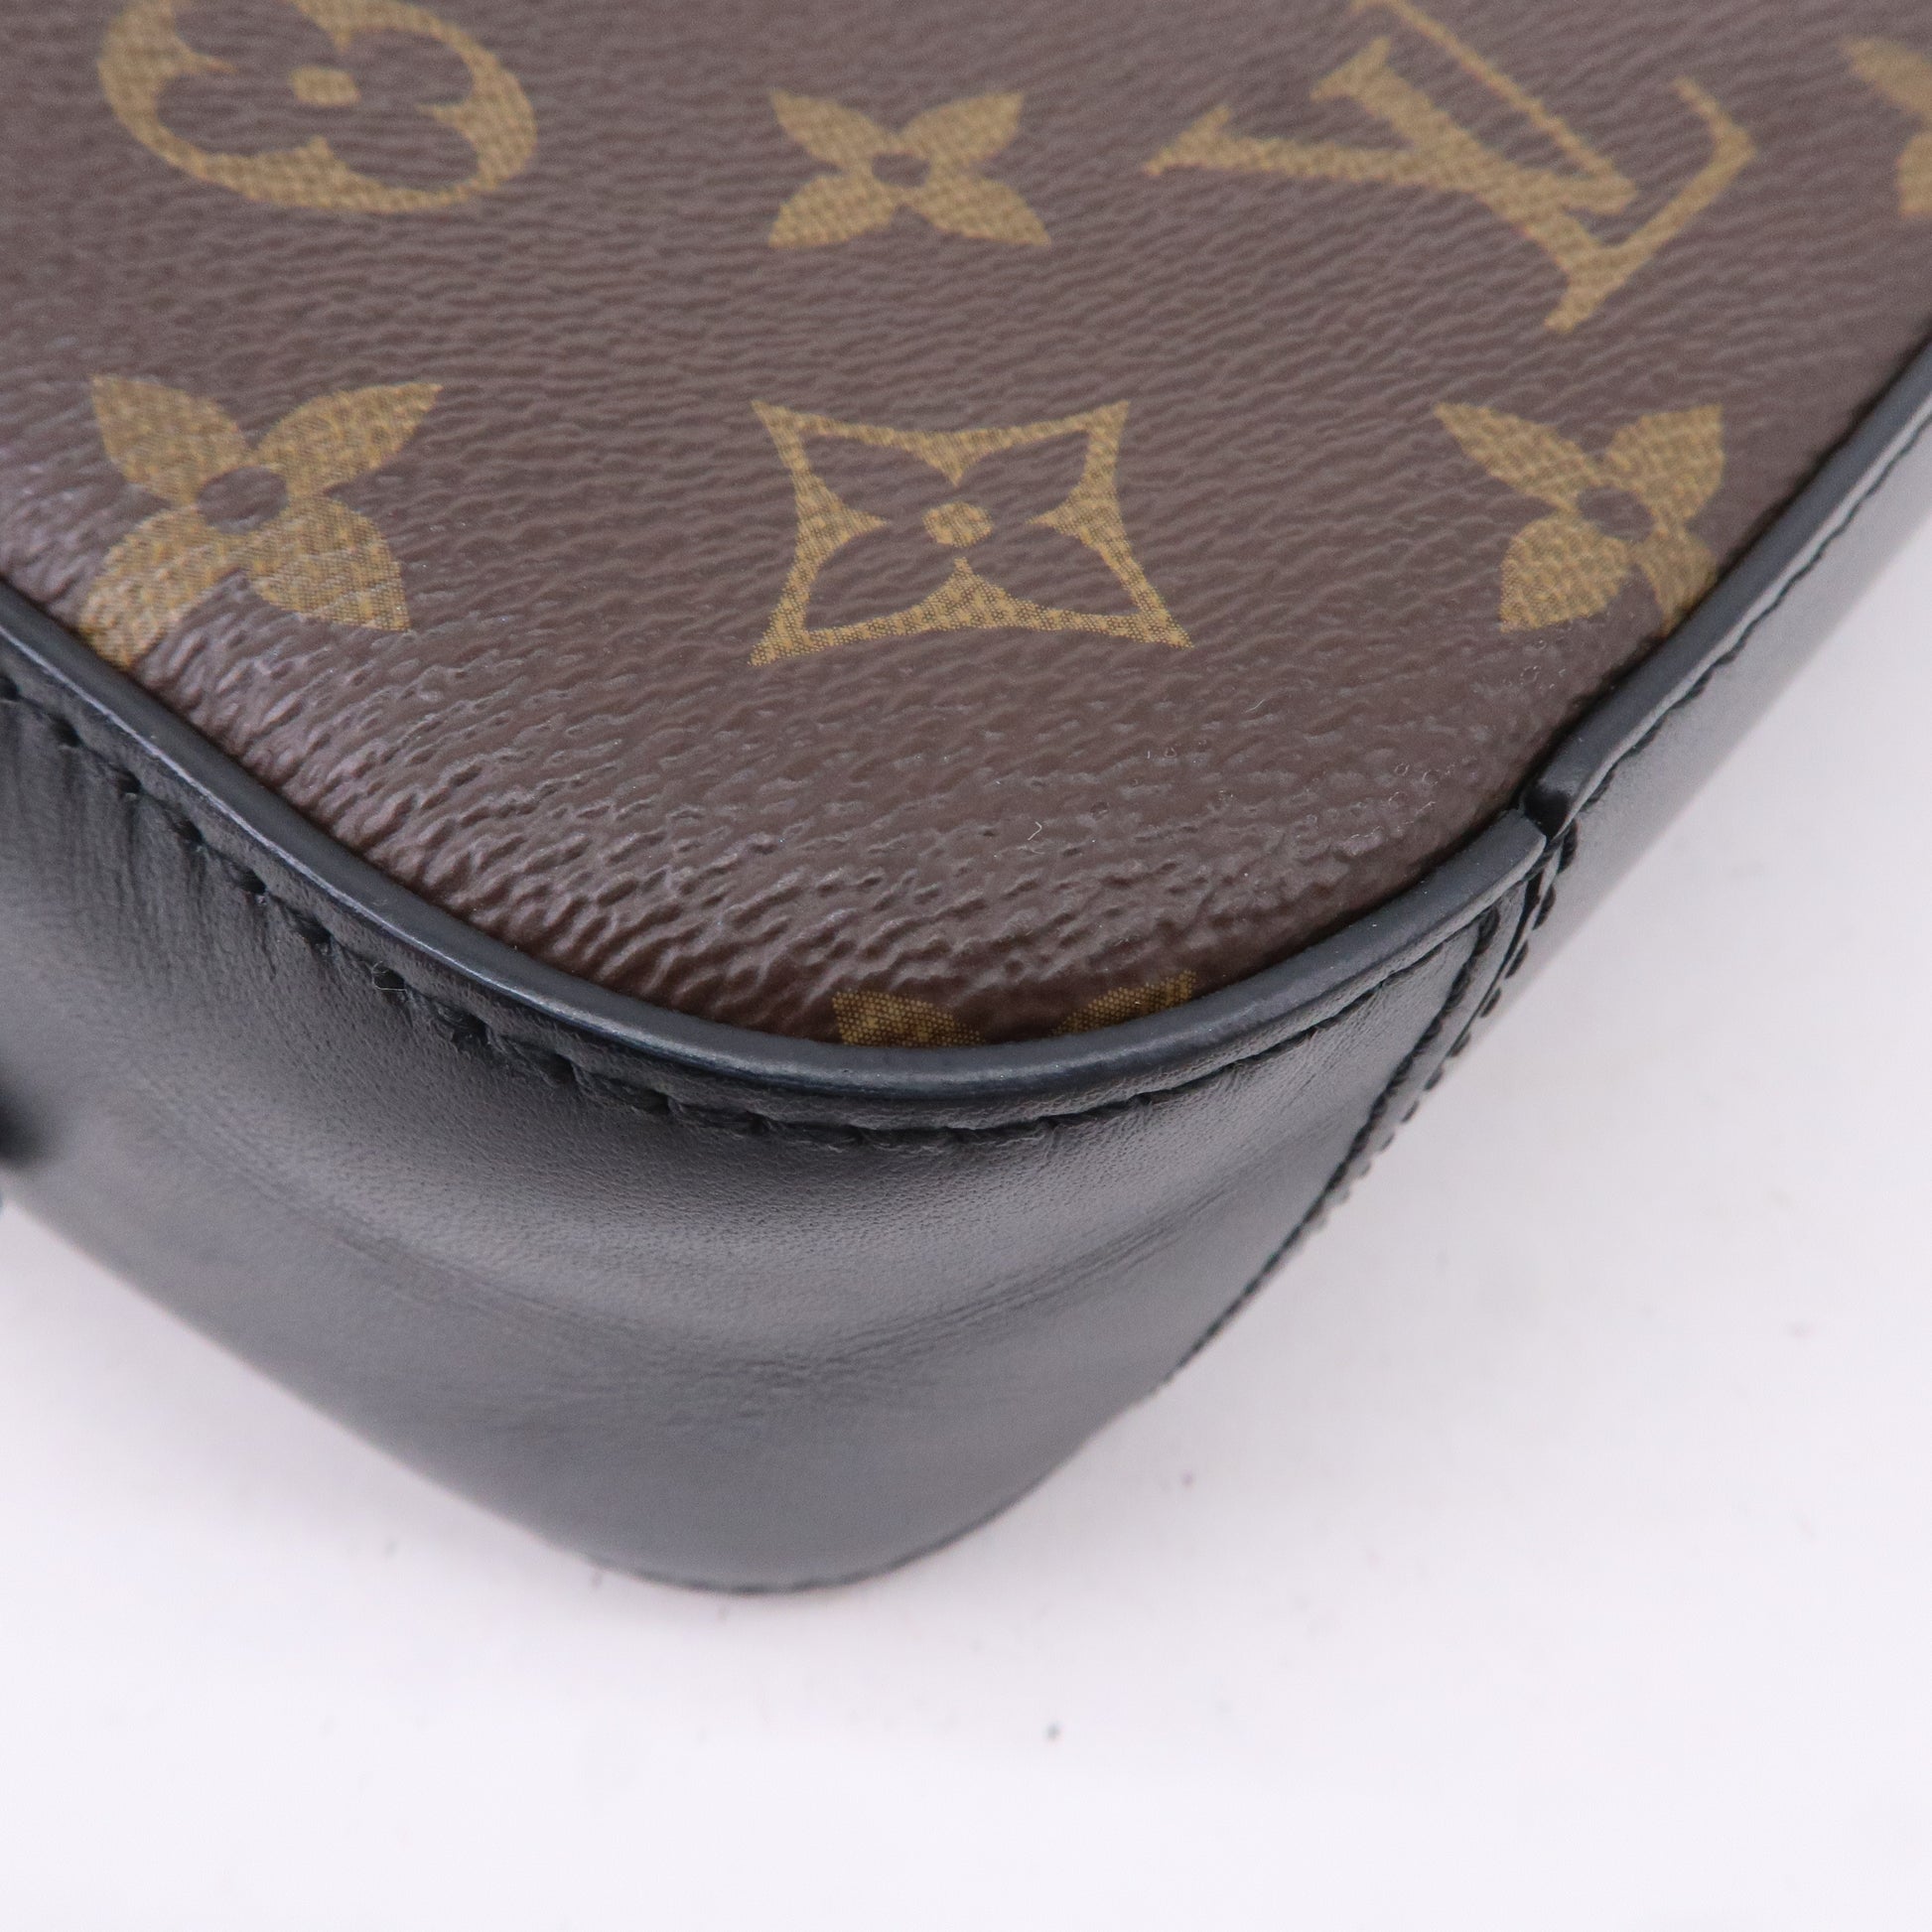 Louis Vuitton Black Calfskin Paris Vendome Luggage Tag - Preloved LV